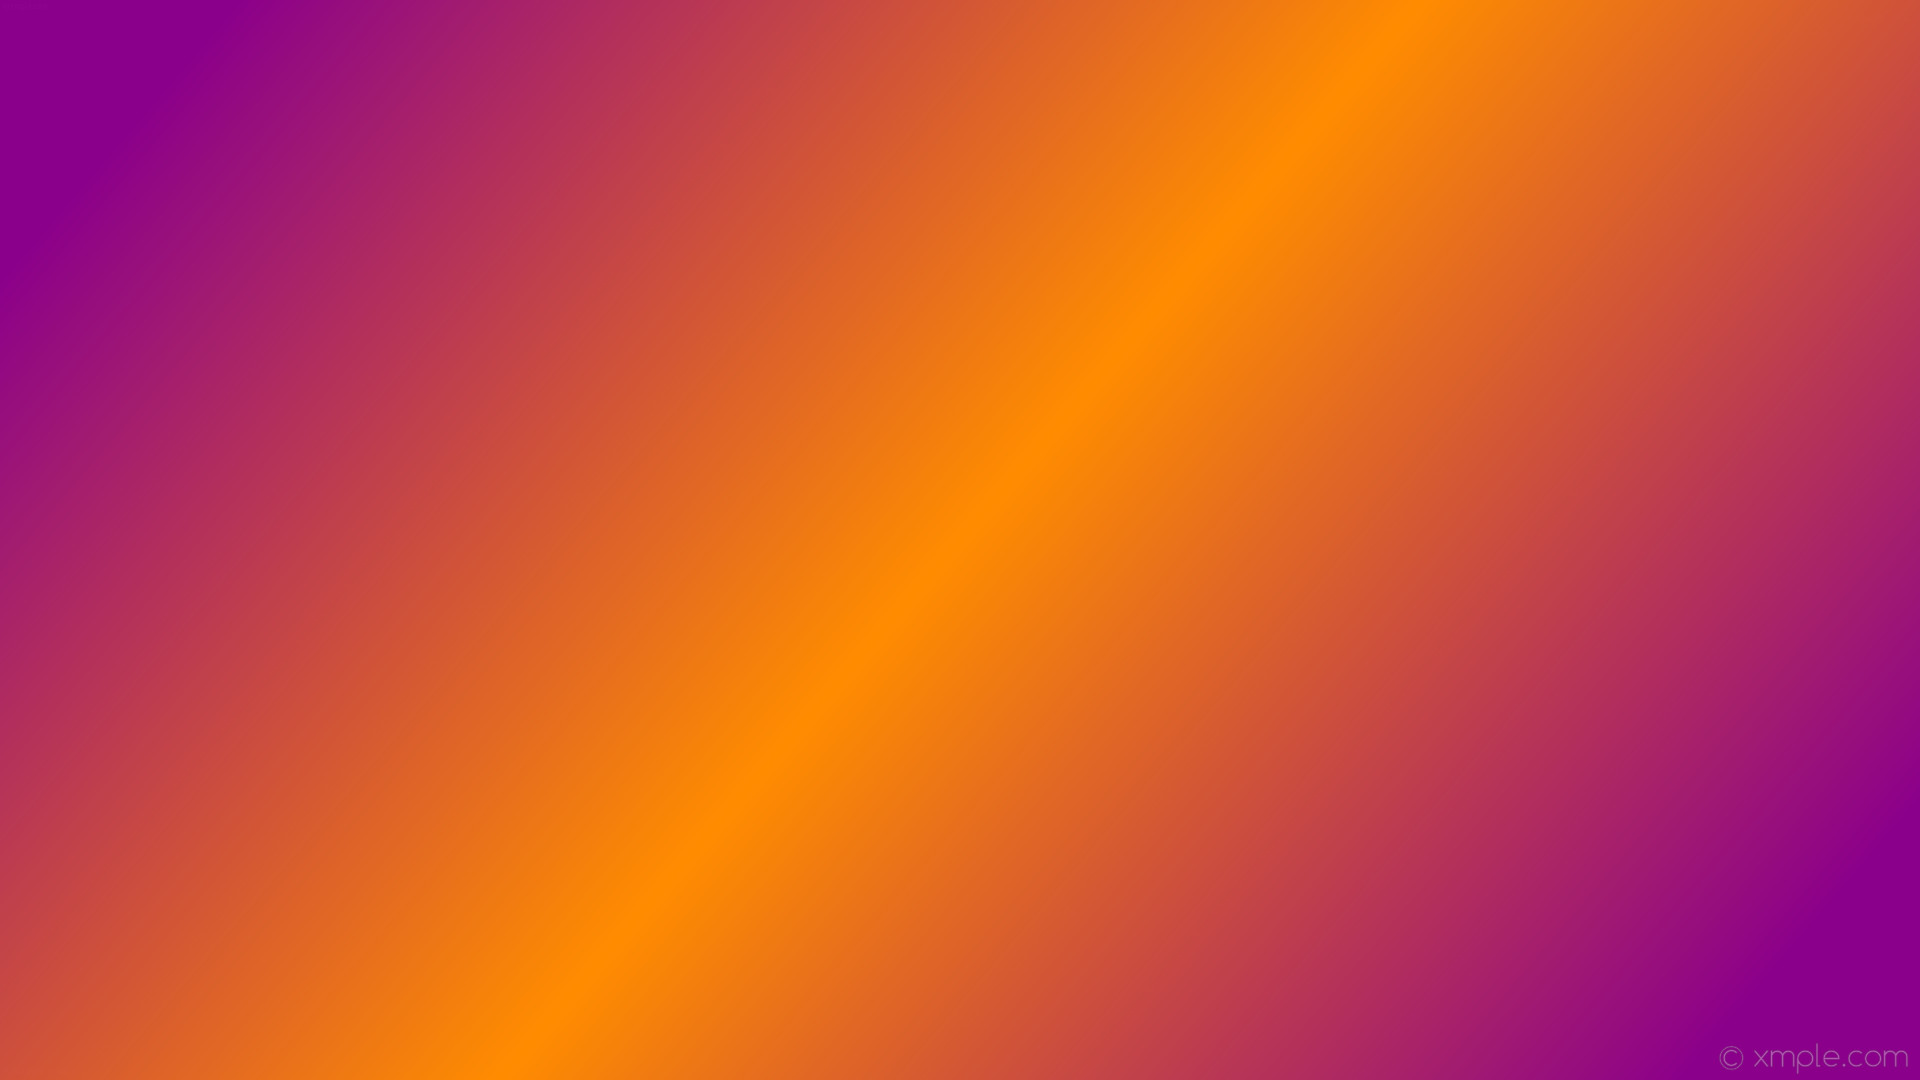 1920x1080 wallpaper linear orange purple highlight gradient dark magenta dark orange  #8b008b #ff8c00 345Â°